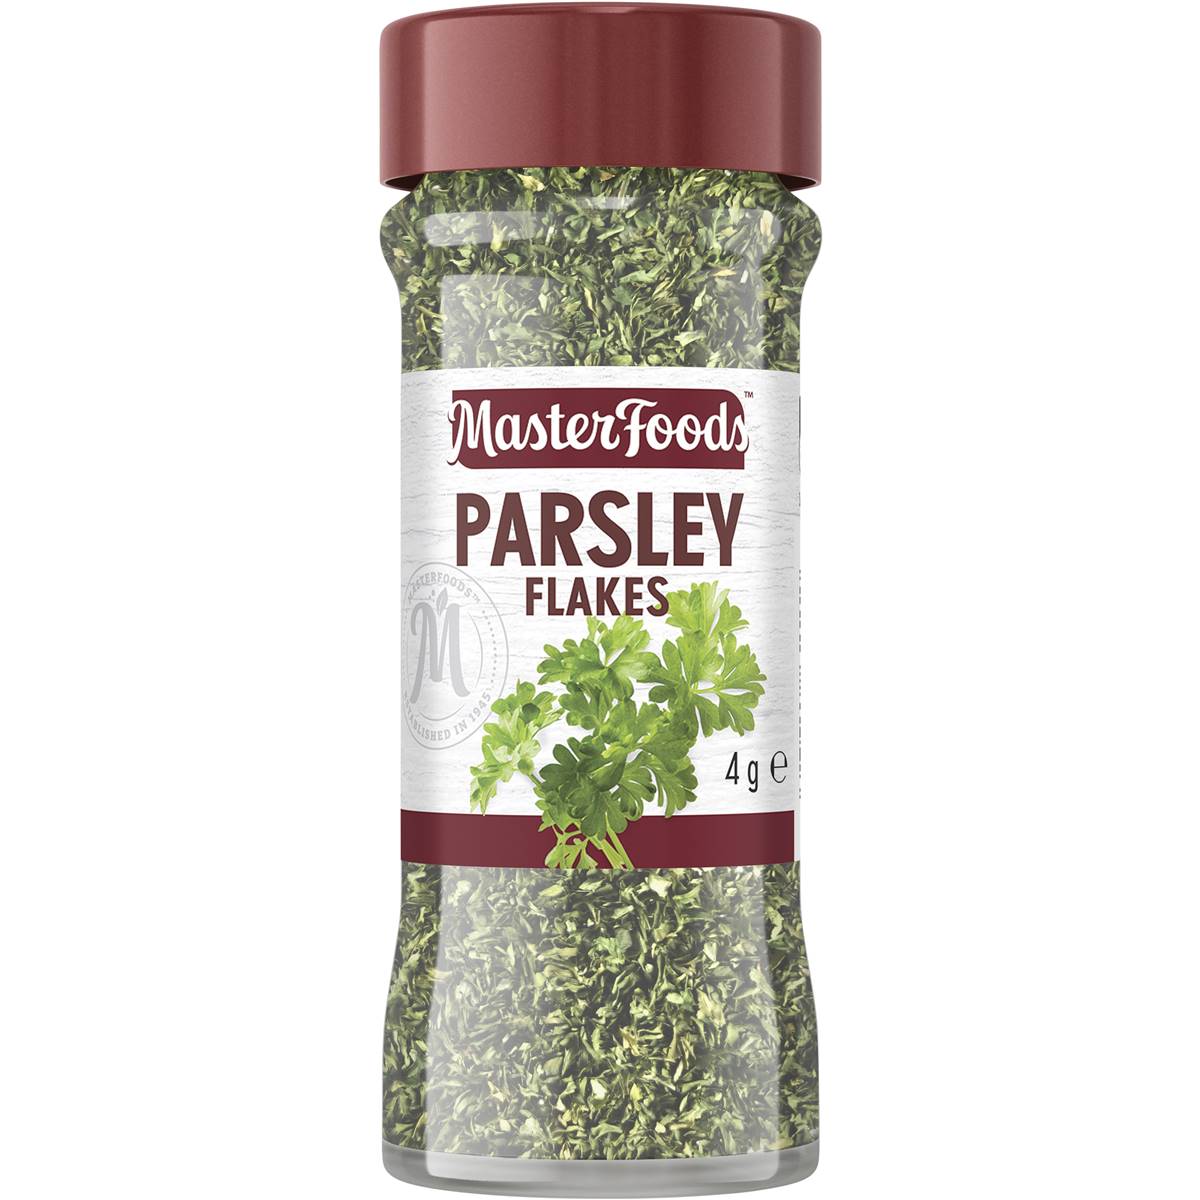 Masterfoods Parsley Flakes 45g